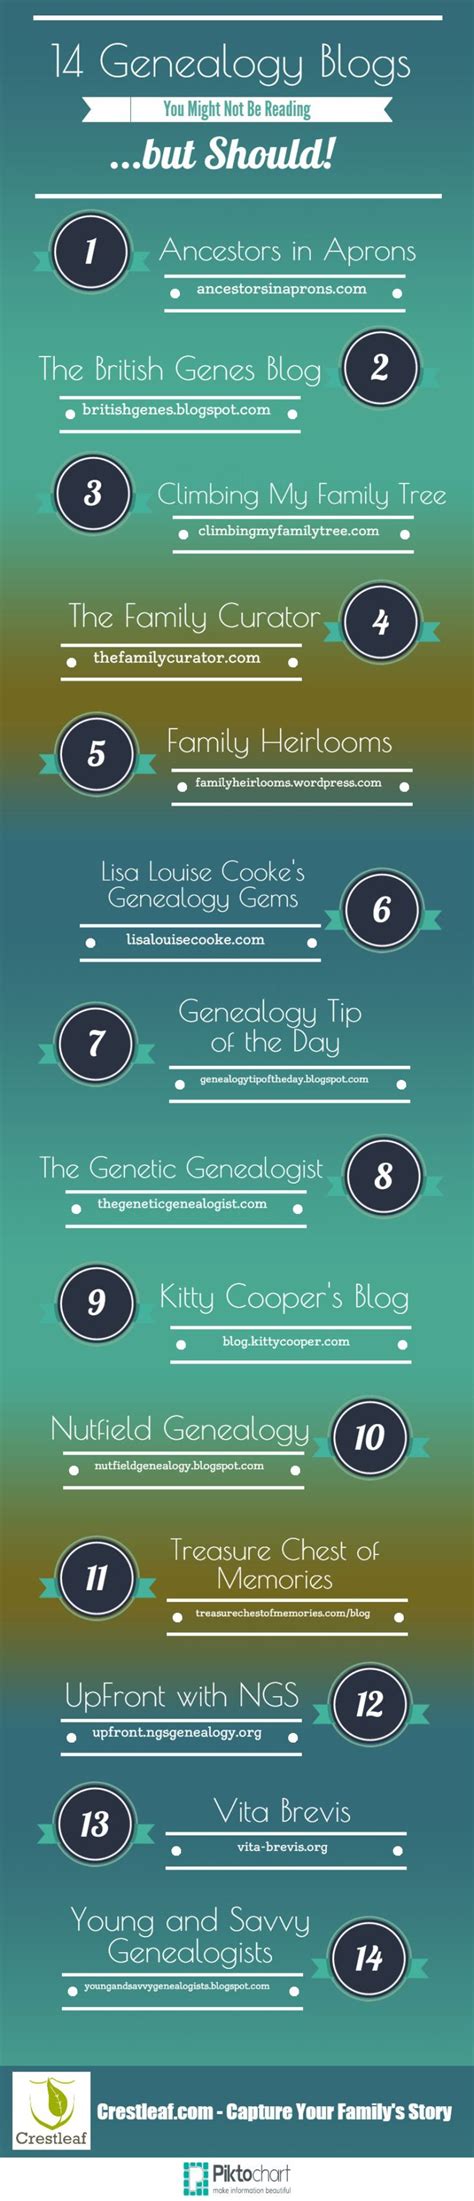 14-genealogy-blogs-you-might-not-be-reading-but-should Genealogy Websites, Genealogy Resources ...